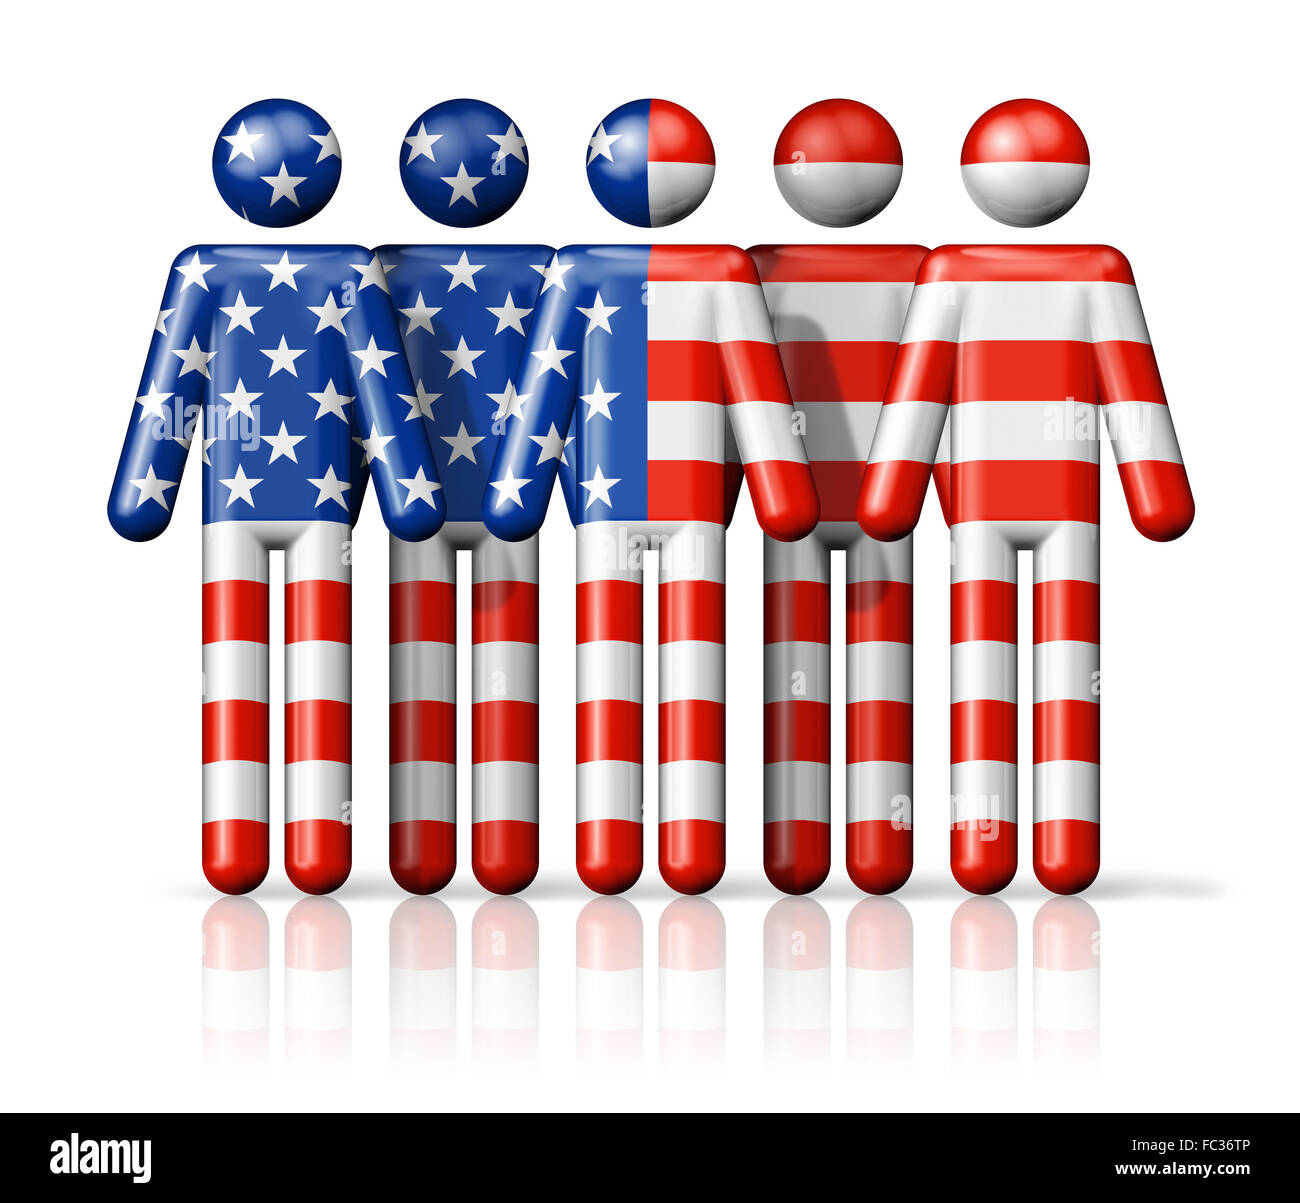 Us persons. Звездно полосатая логика. Одежда с американским флагом. America's State symbols 3d images.